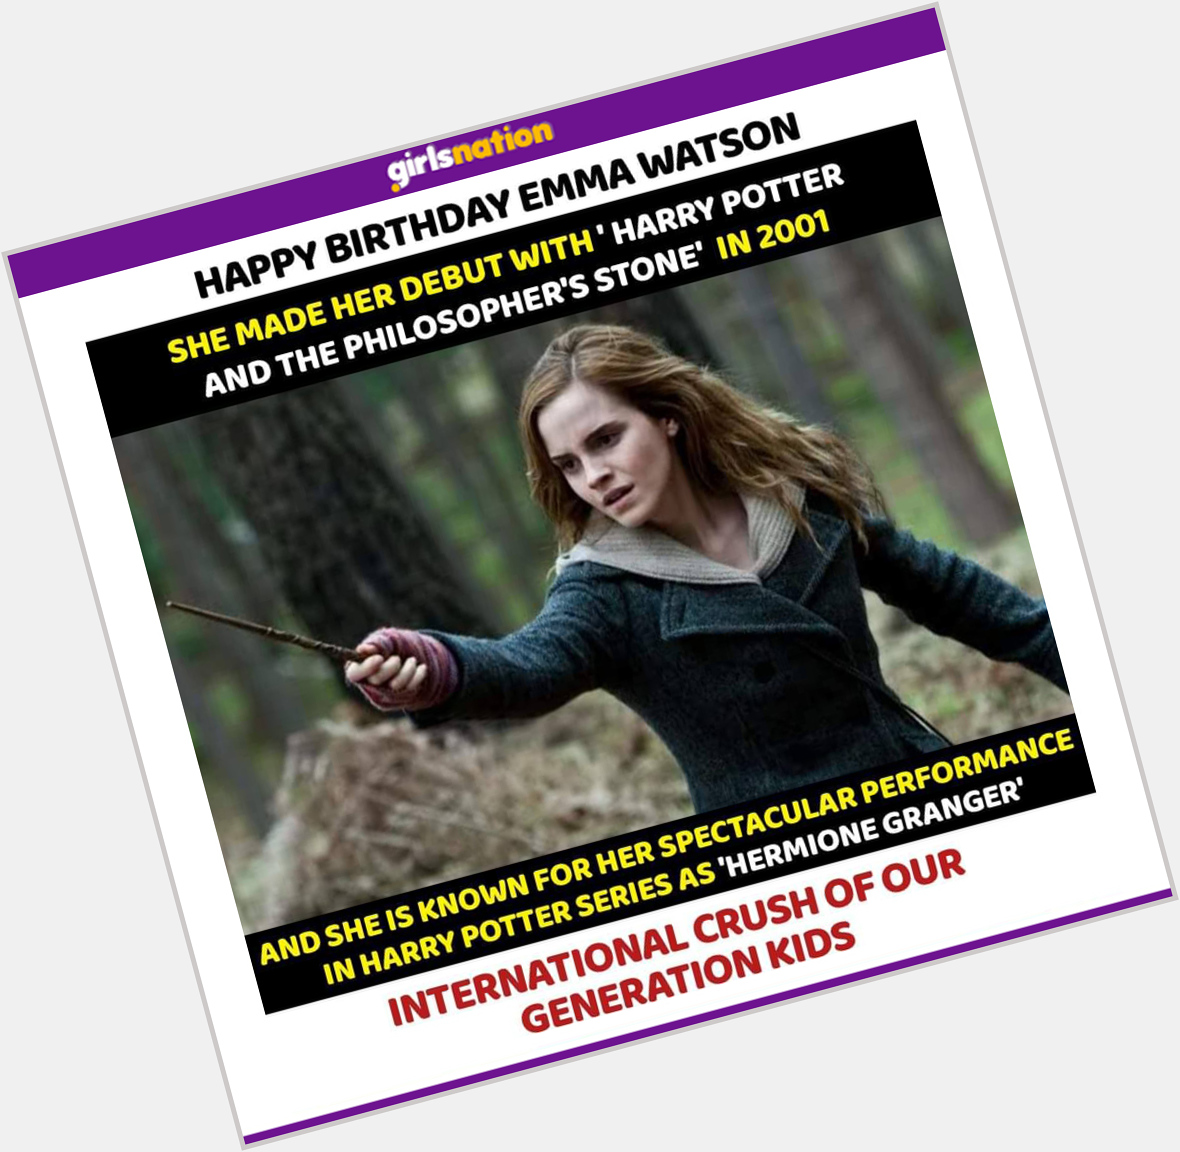 Happy Birthday, Emma Watson! 